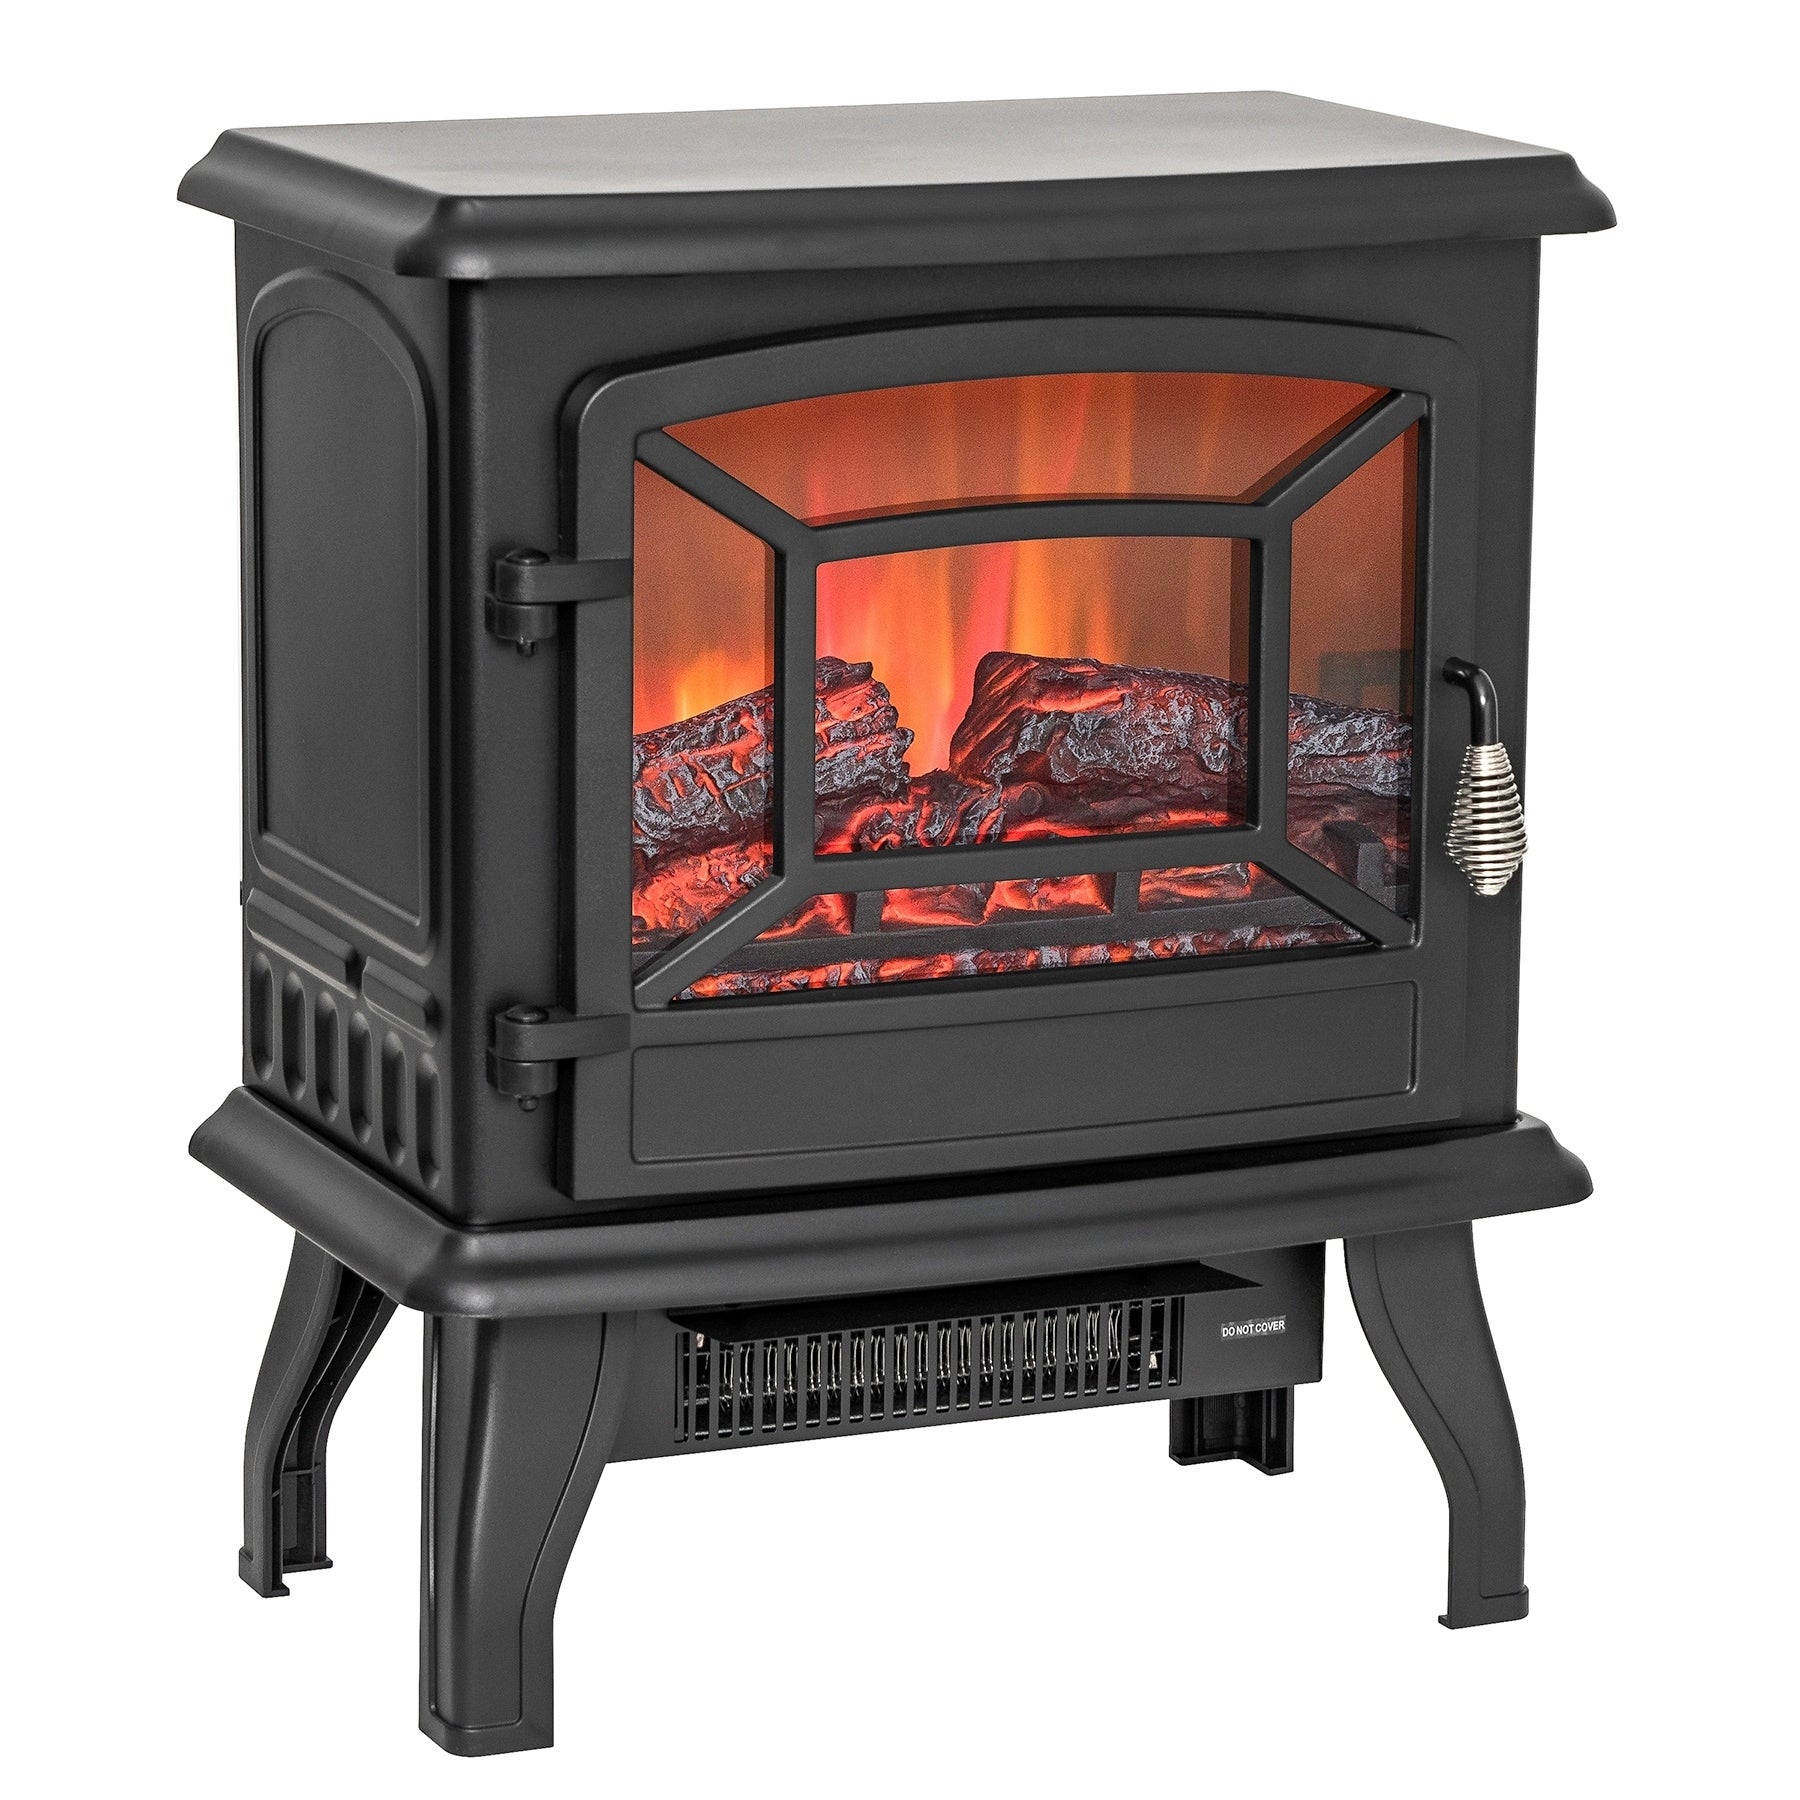 AKDY FP0078 17 Freestanding Portable Electric Fireplace 3D Flames Firebox w Logs Heater e1b5293b 5219 4064 8c41 903b6a